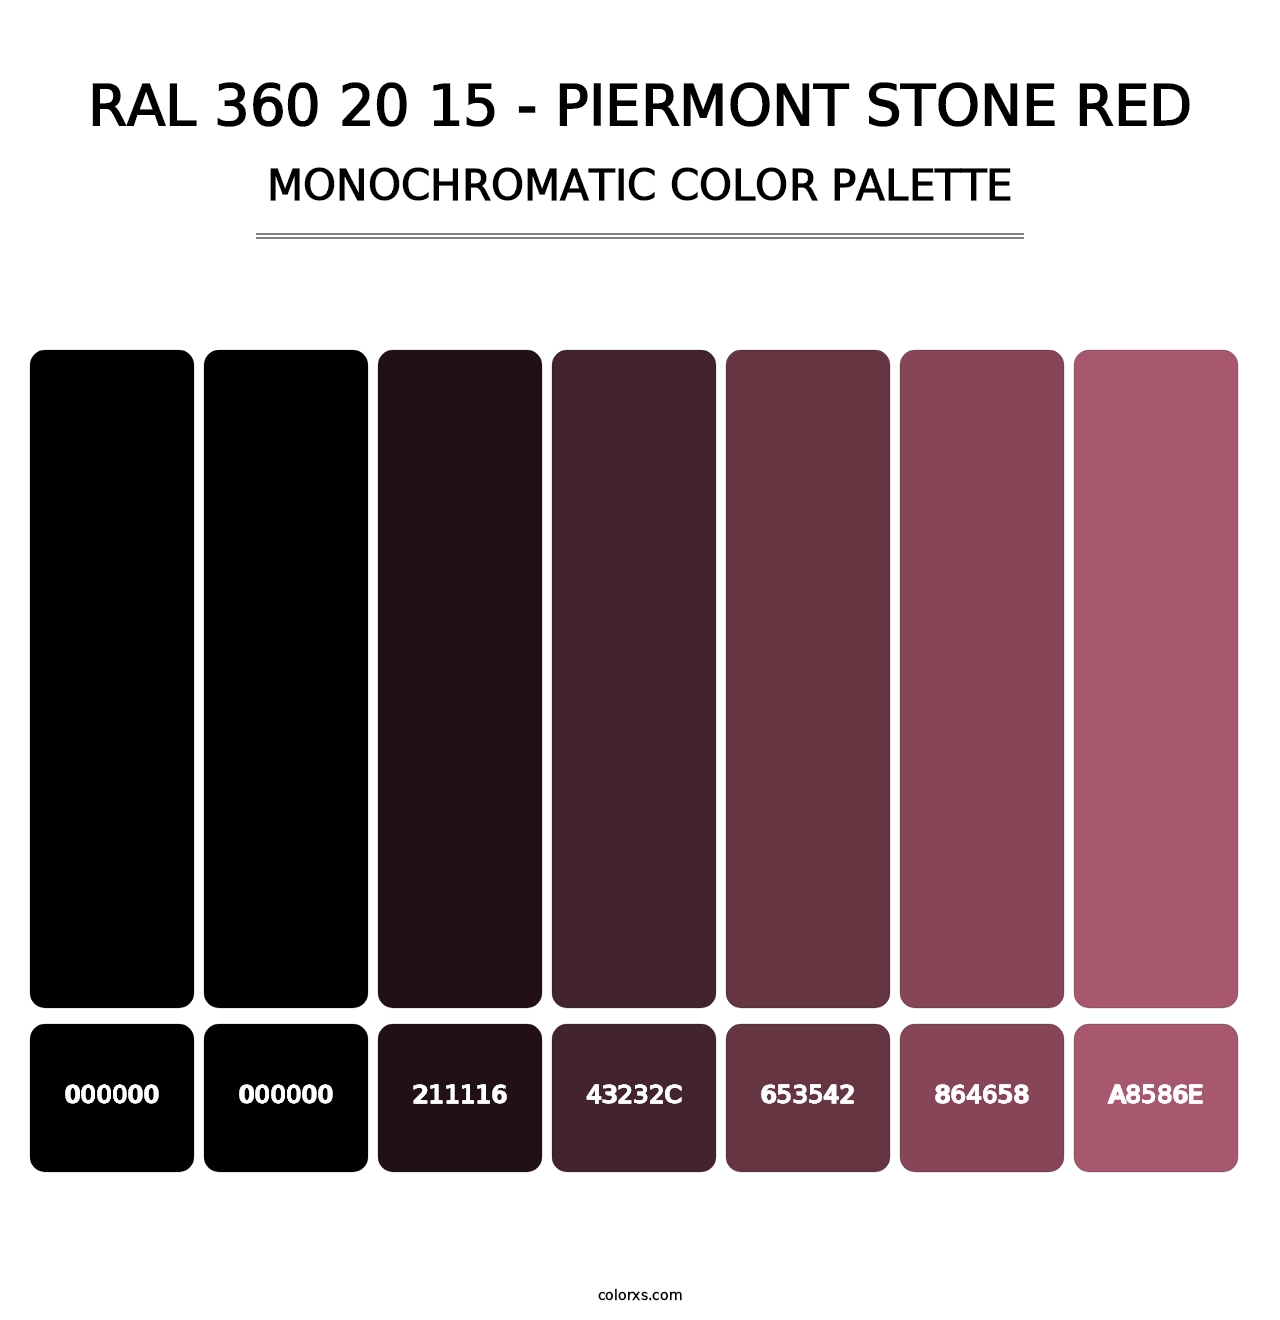 RAL 360 20 15 - Piermont Stone Red - Monochromatic Color Palette